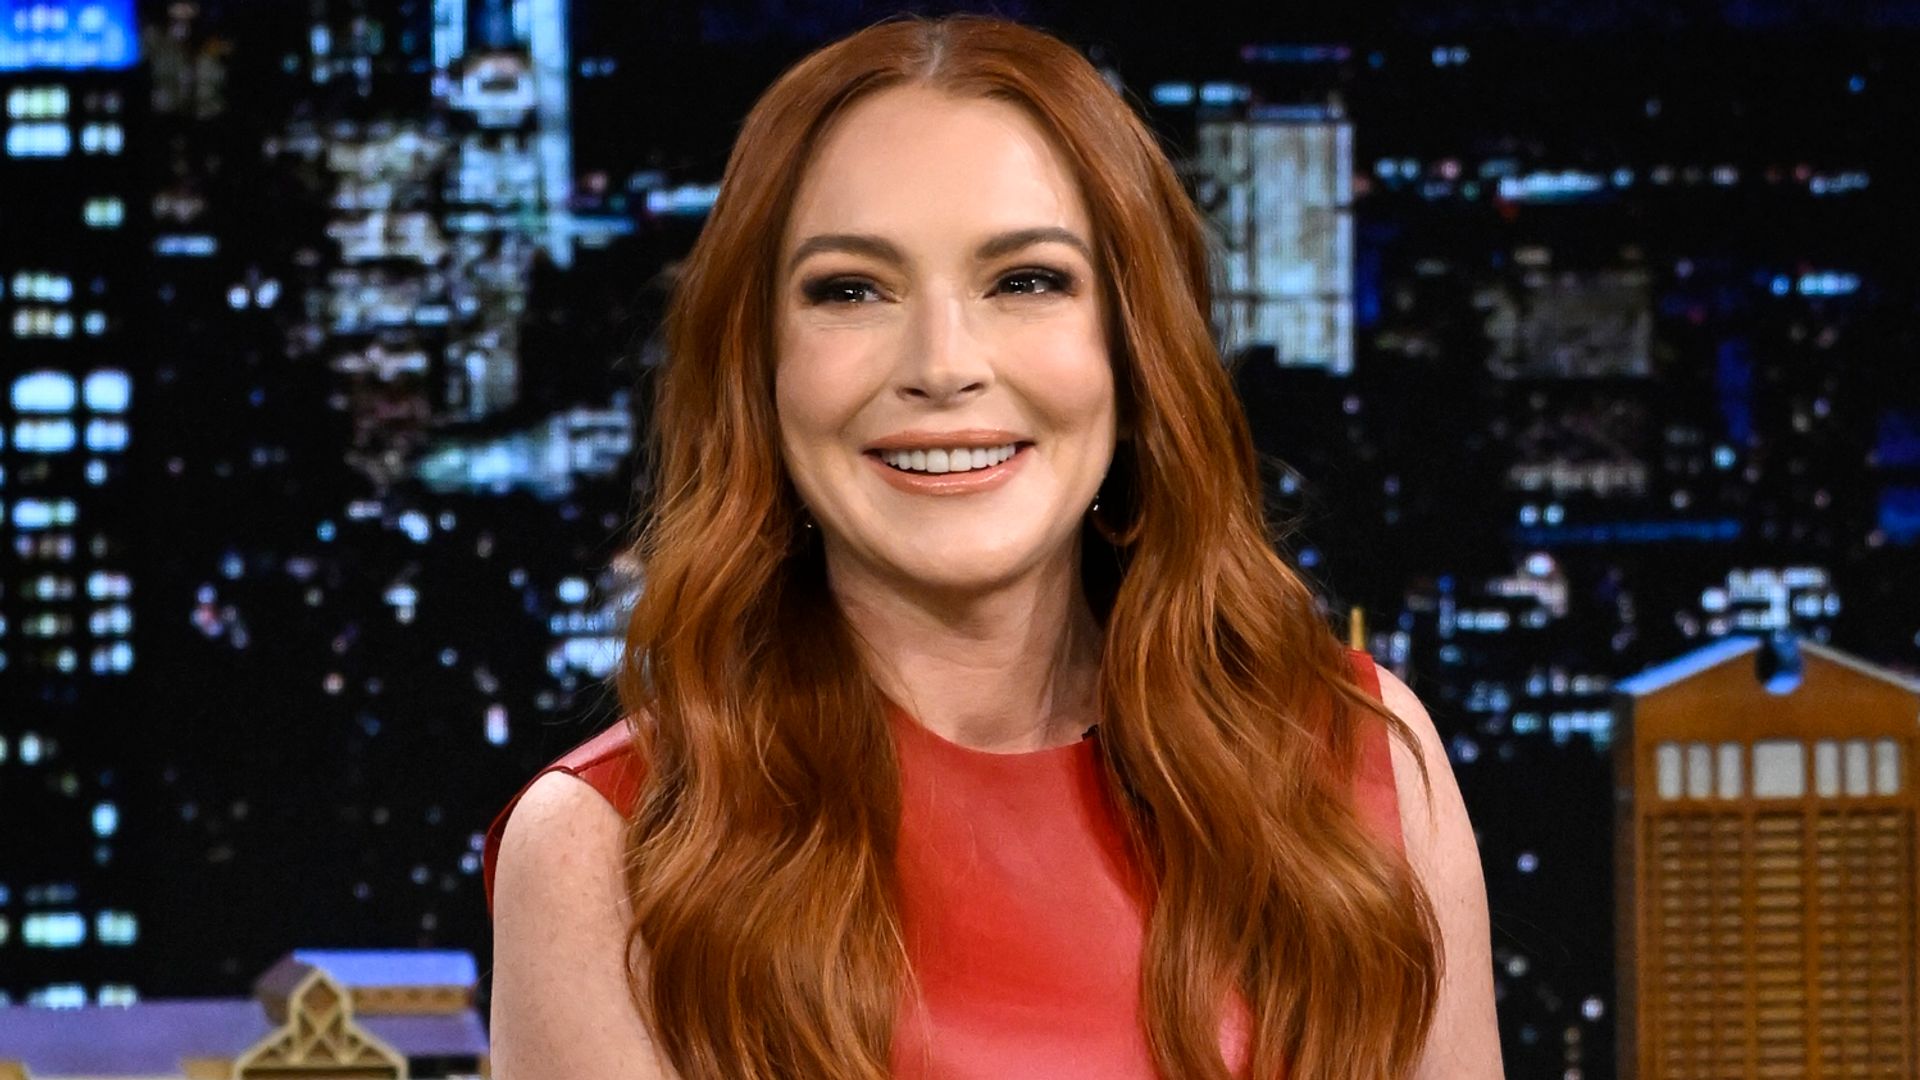 Lindsay Lohan smiling on the Tonight Show